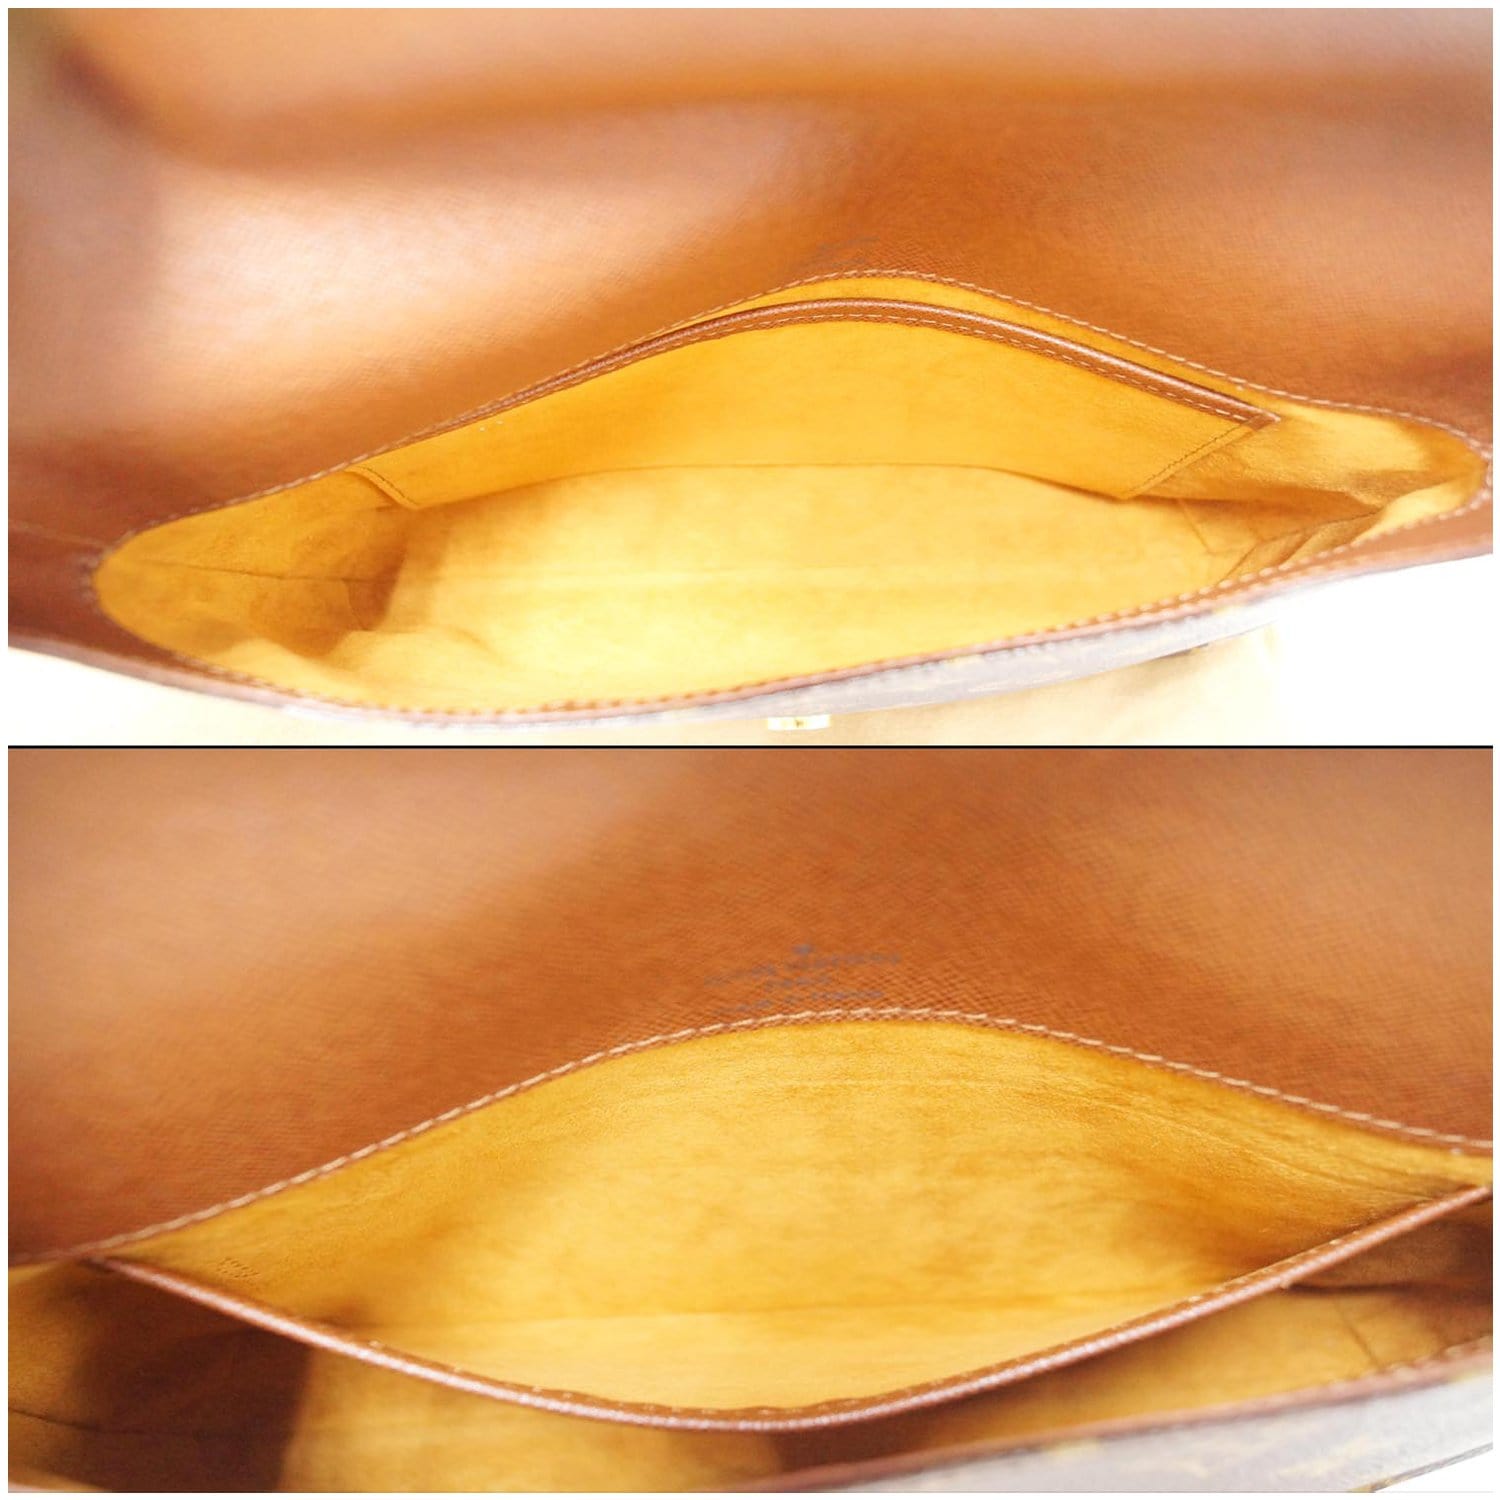 Musette tango cloth handbag Louis Vuitton Brown in Cloth - 25282586